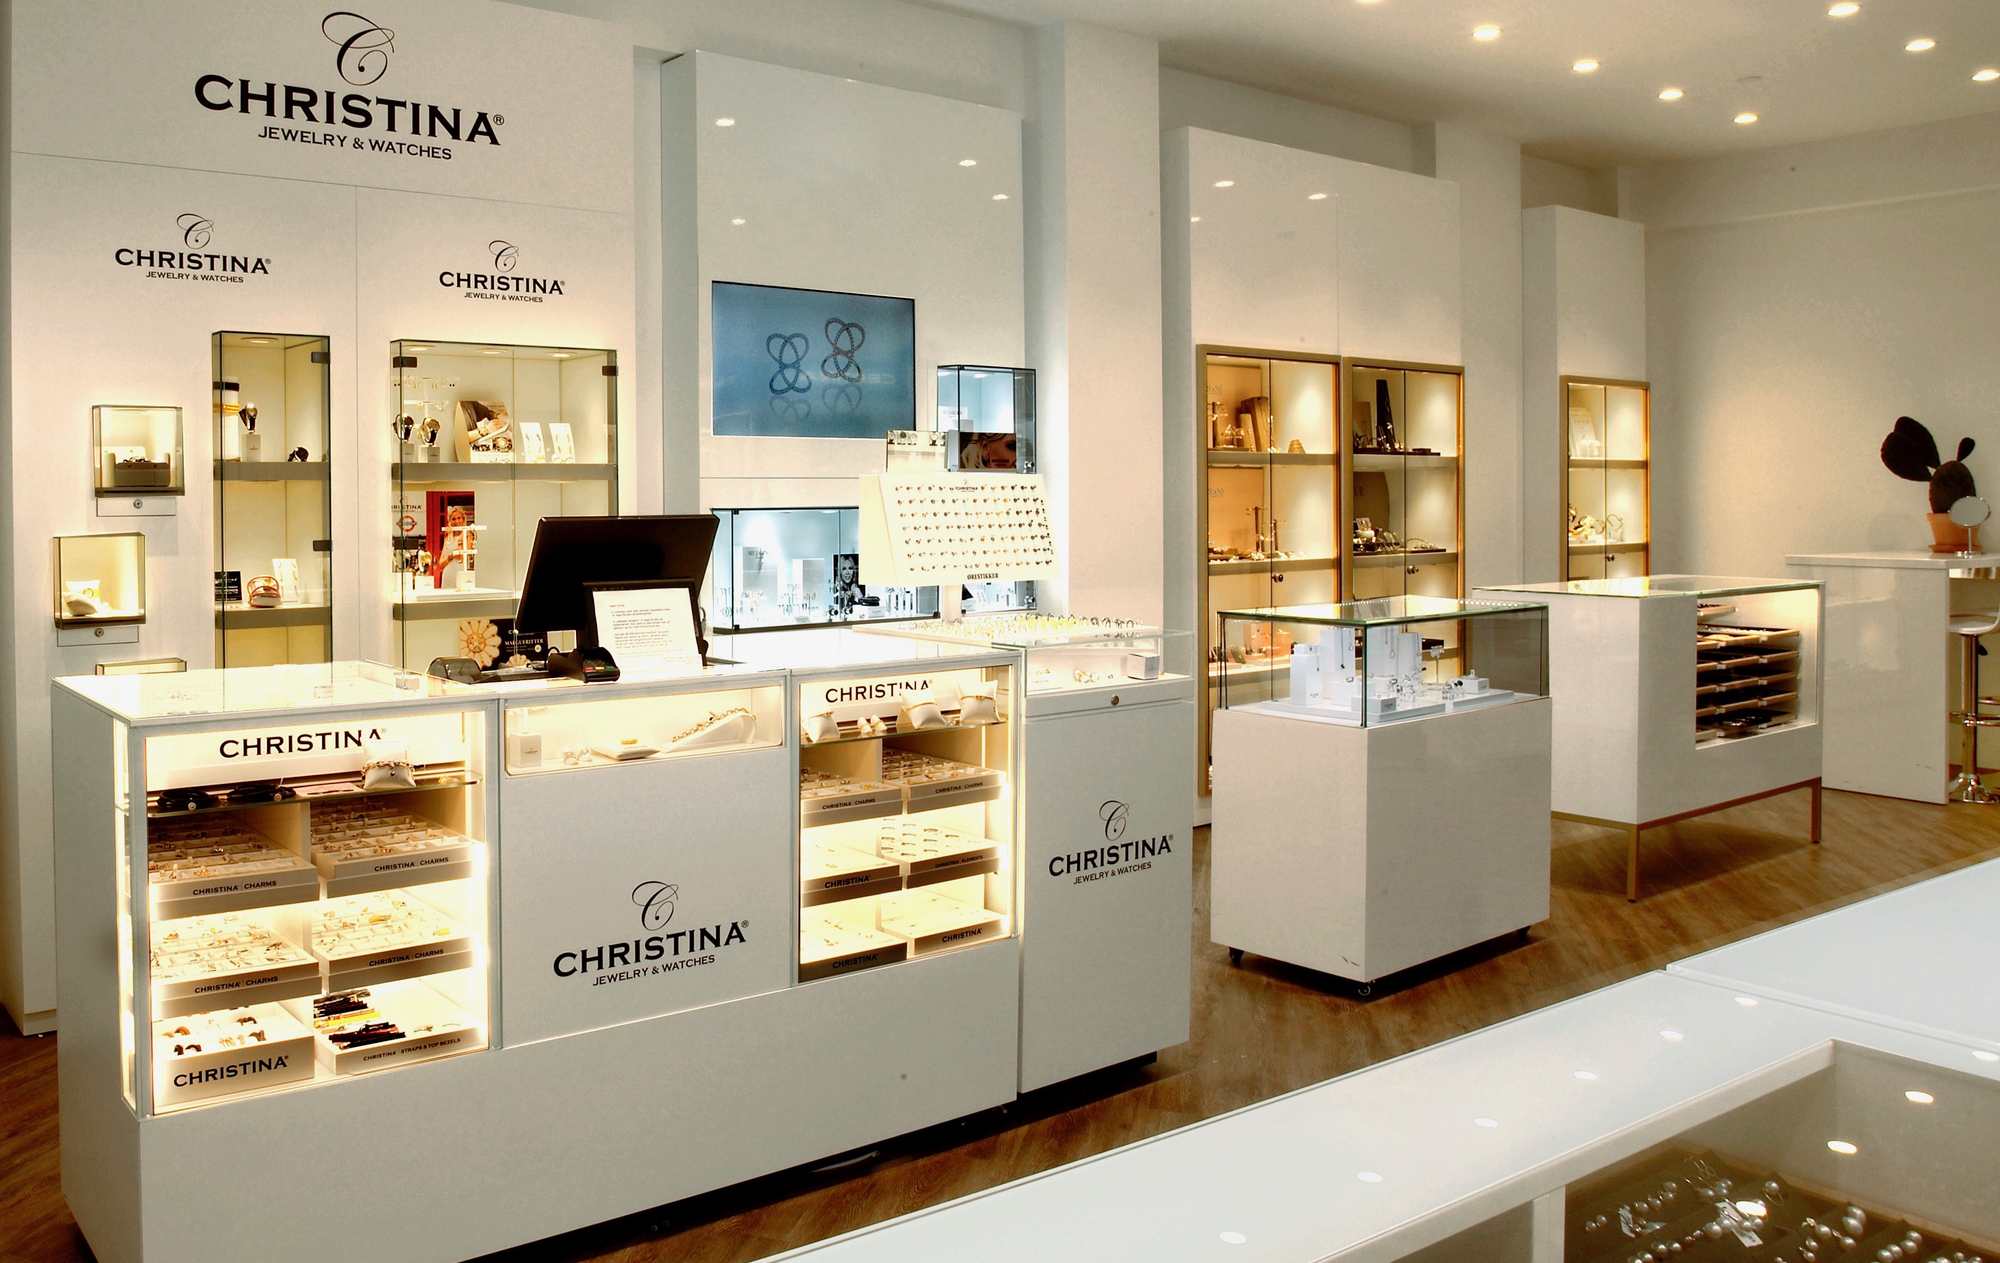 Christina Jewelry & Watches